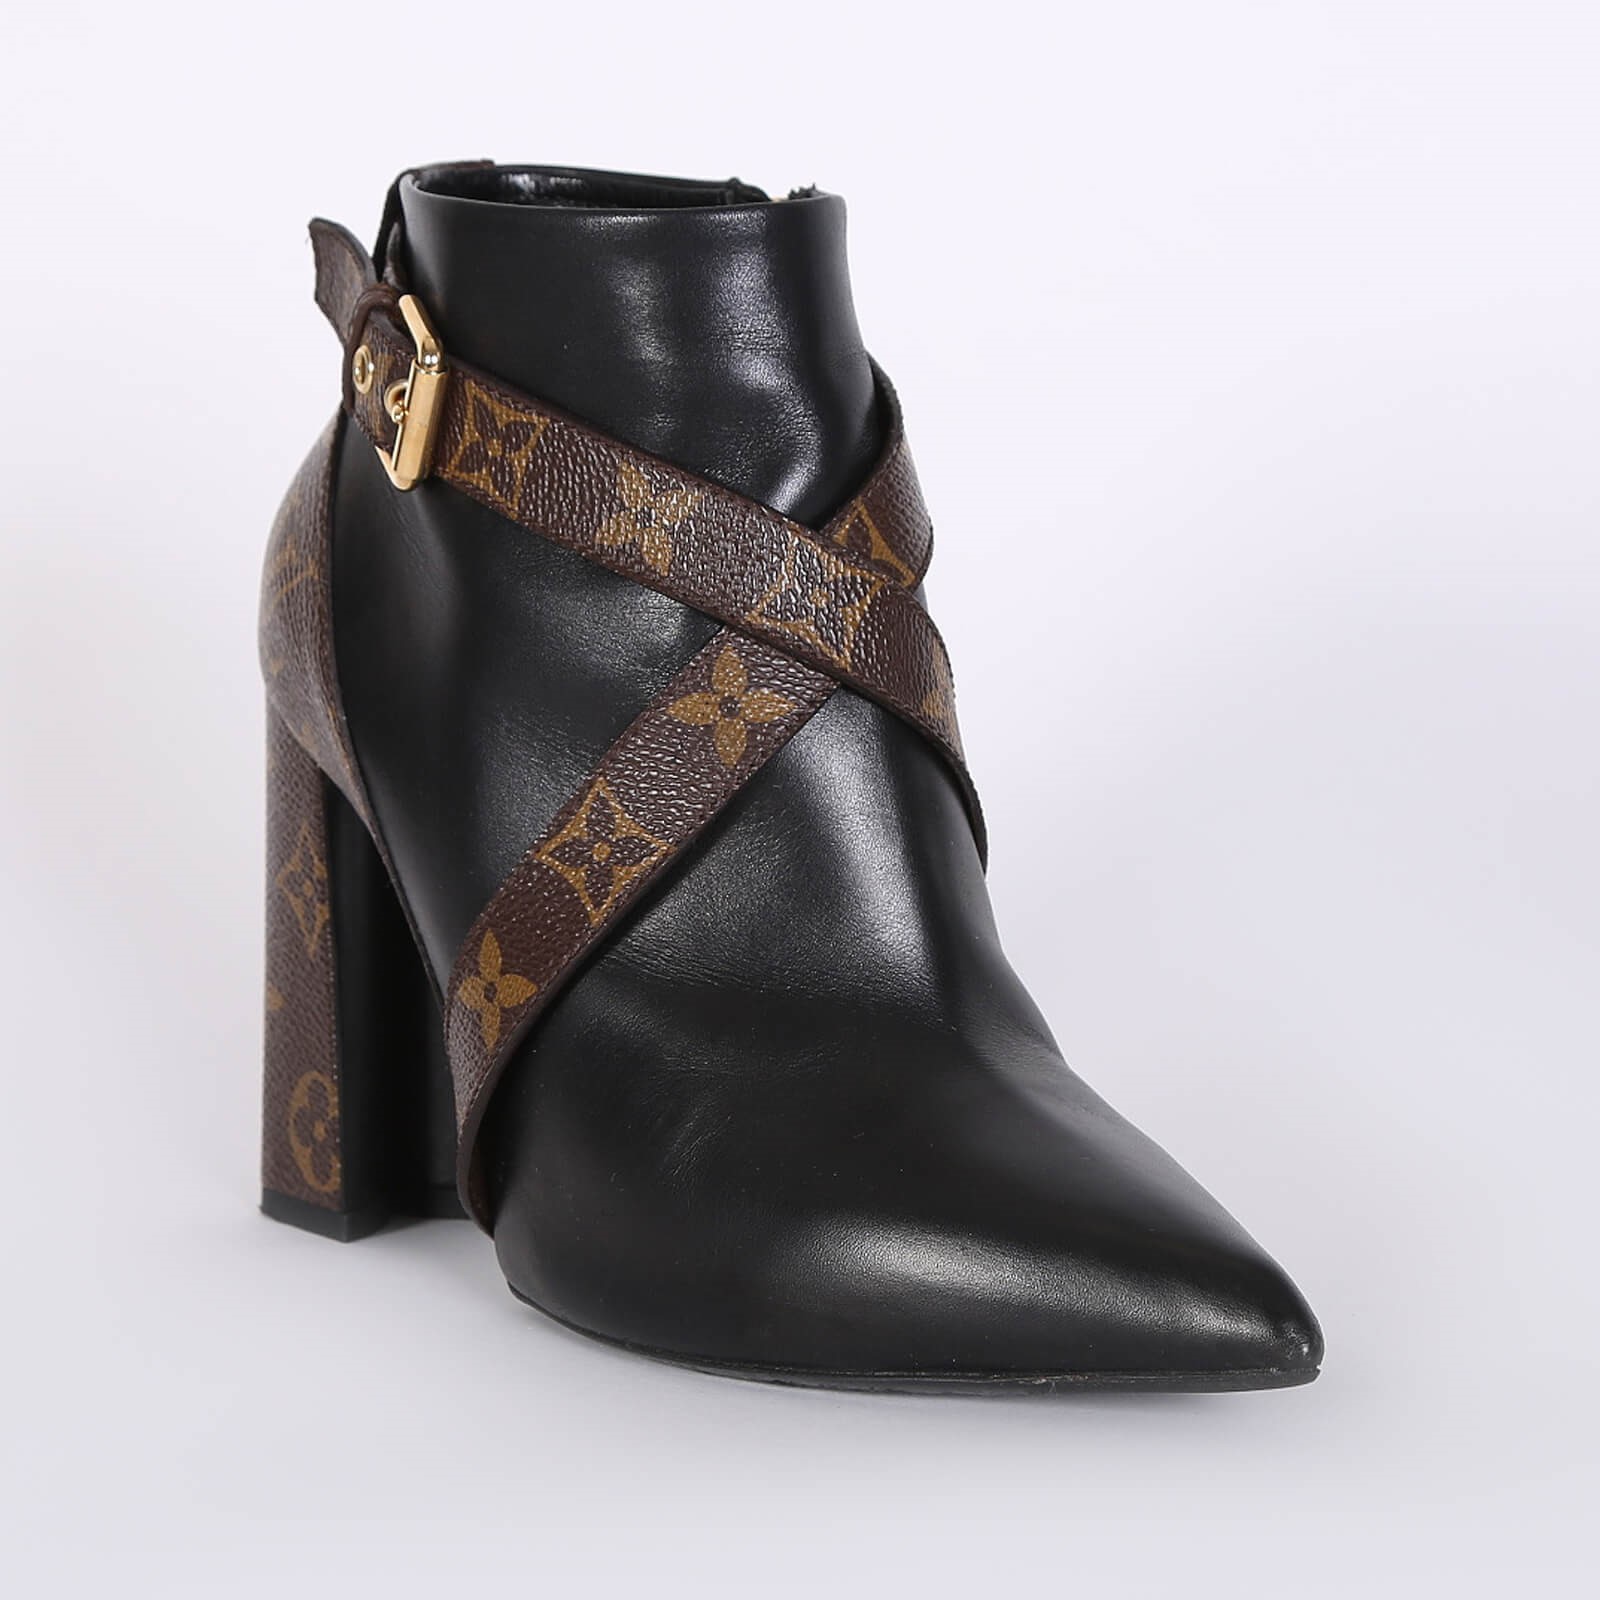 Authentic Louis Vuitton Matchmake Monogram Ankle Boots Size 37 1/2